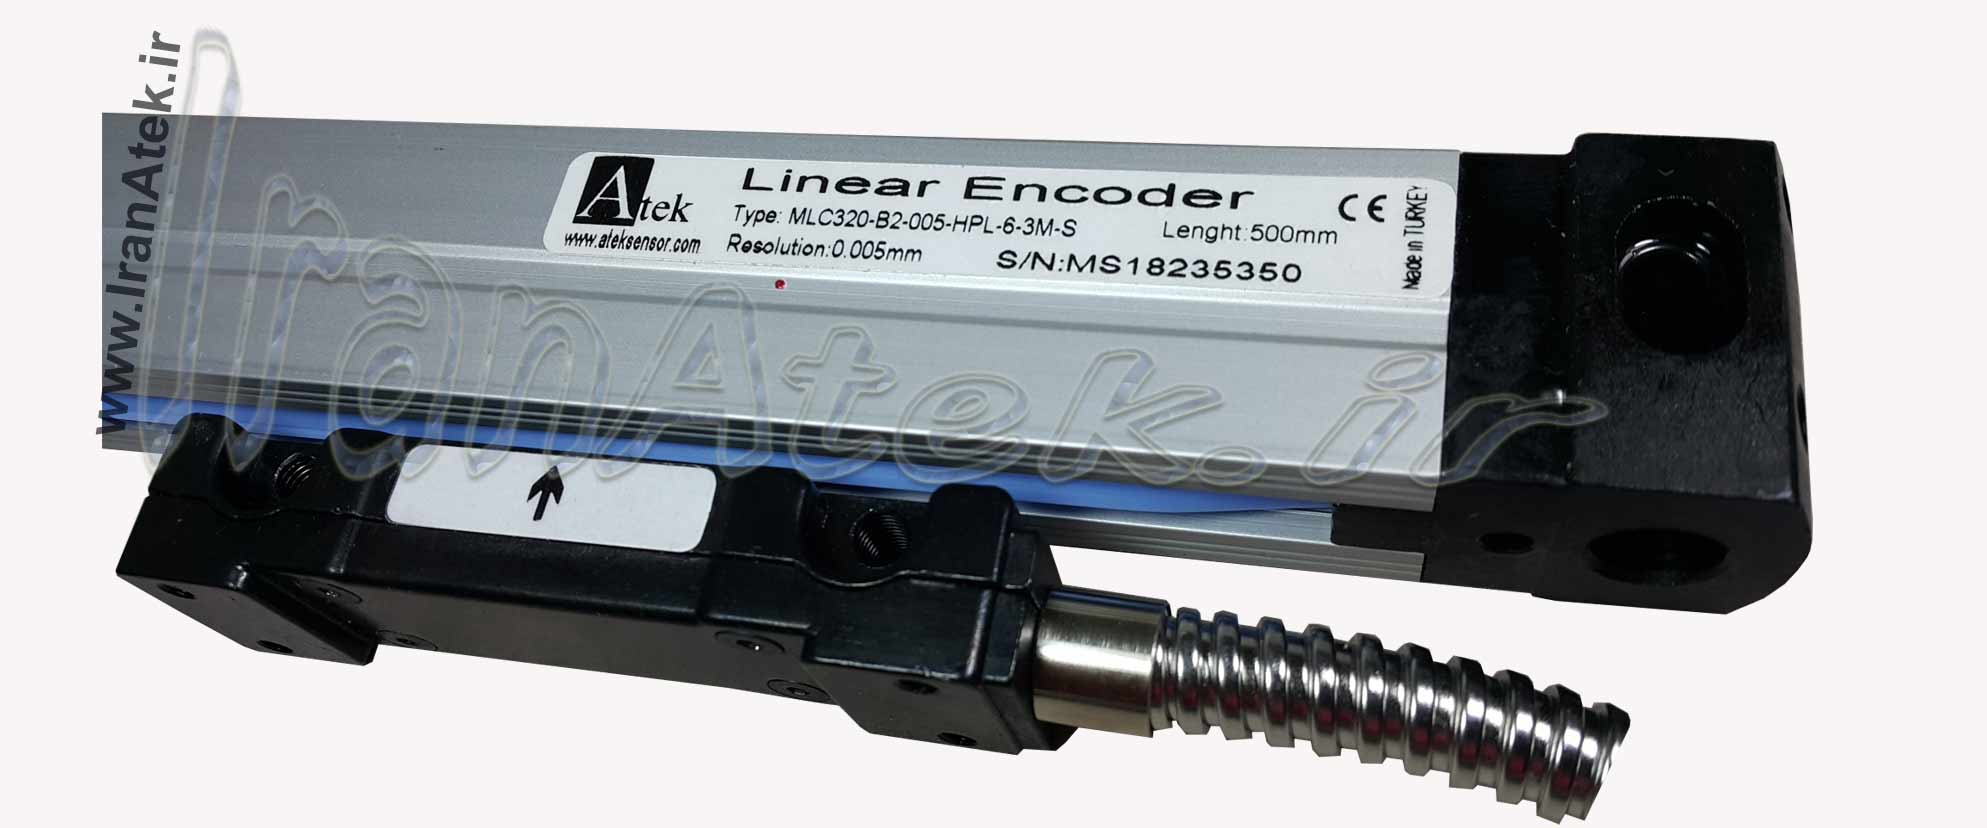 Ateksensor-MLC320 B2 05 HPL 6 3M S 500 mm